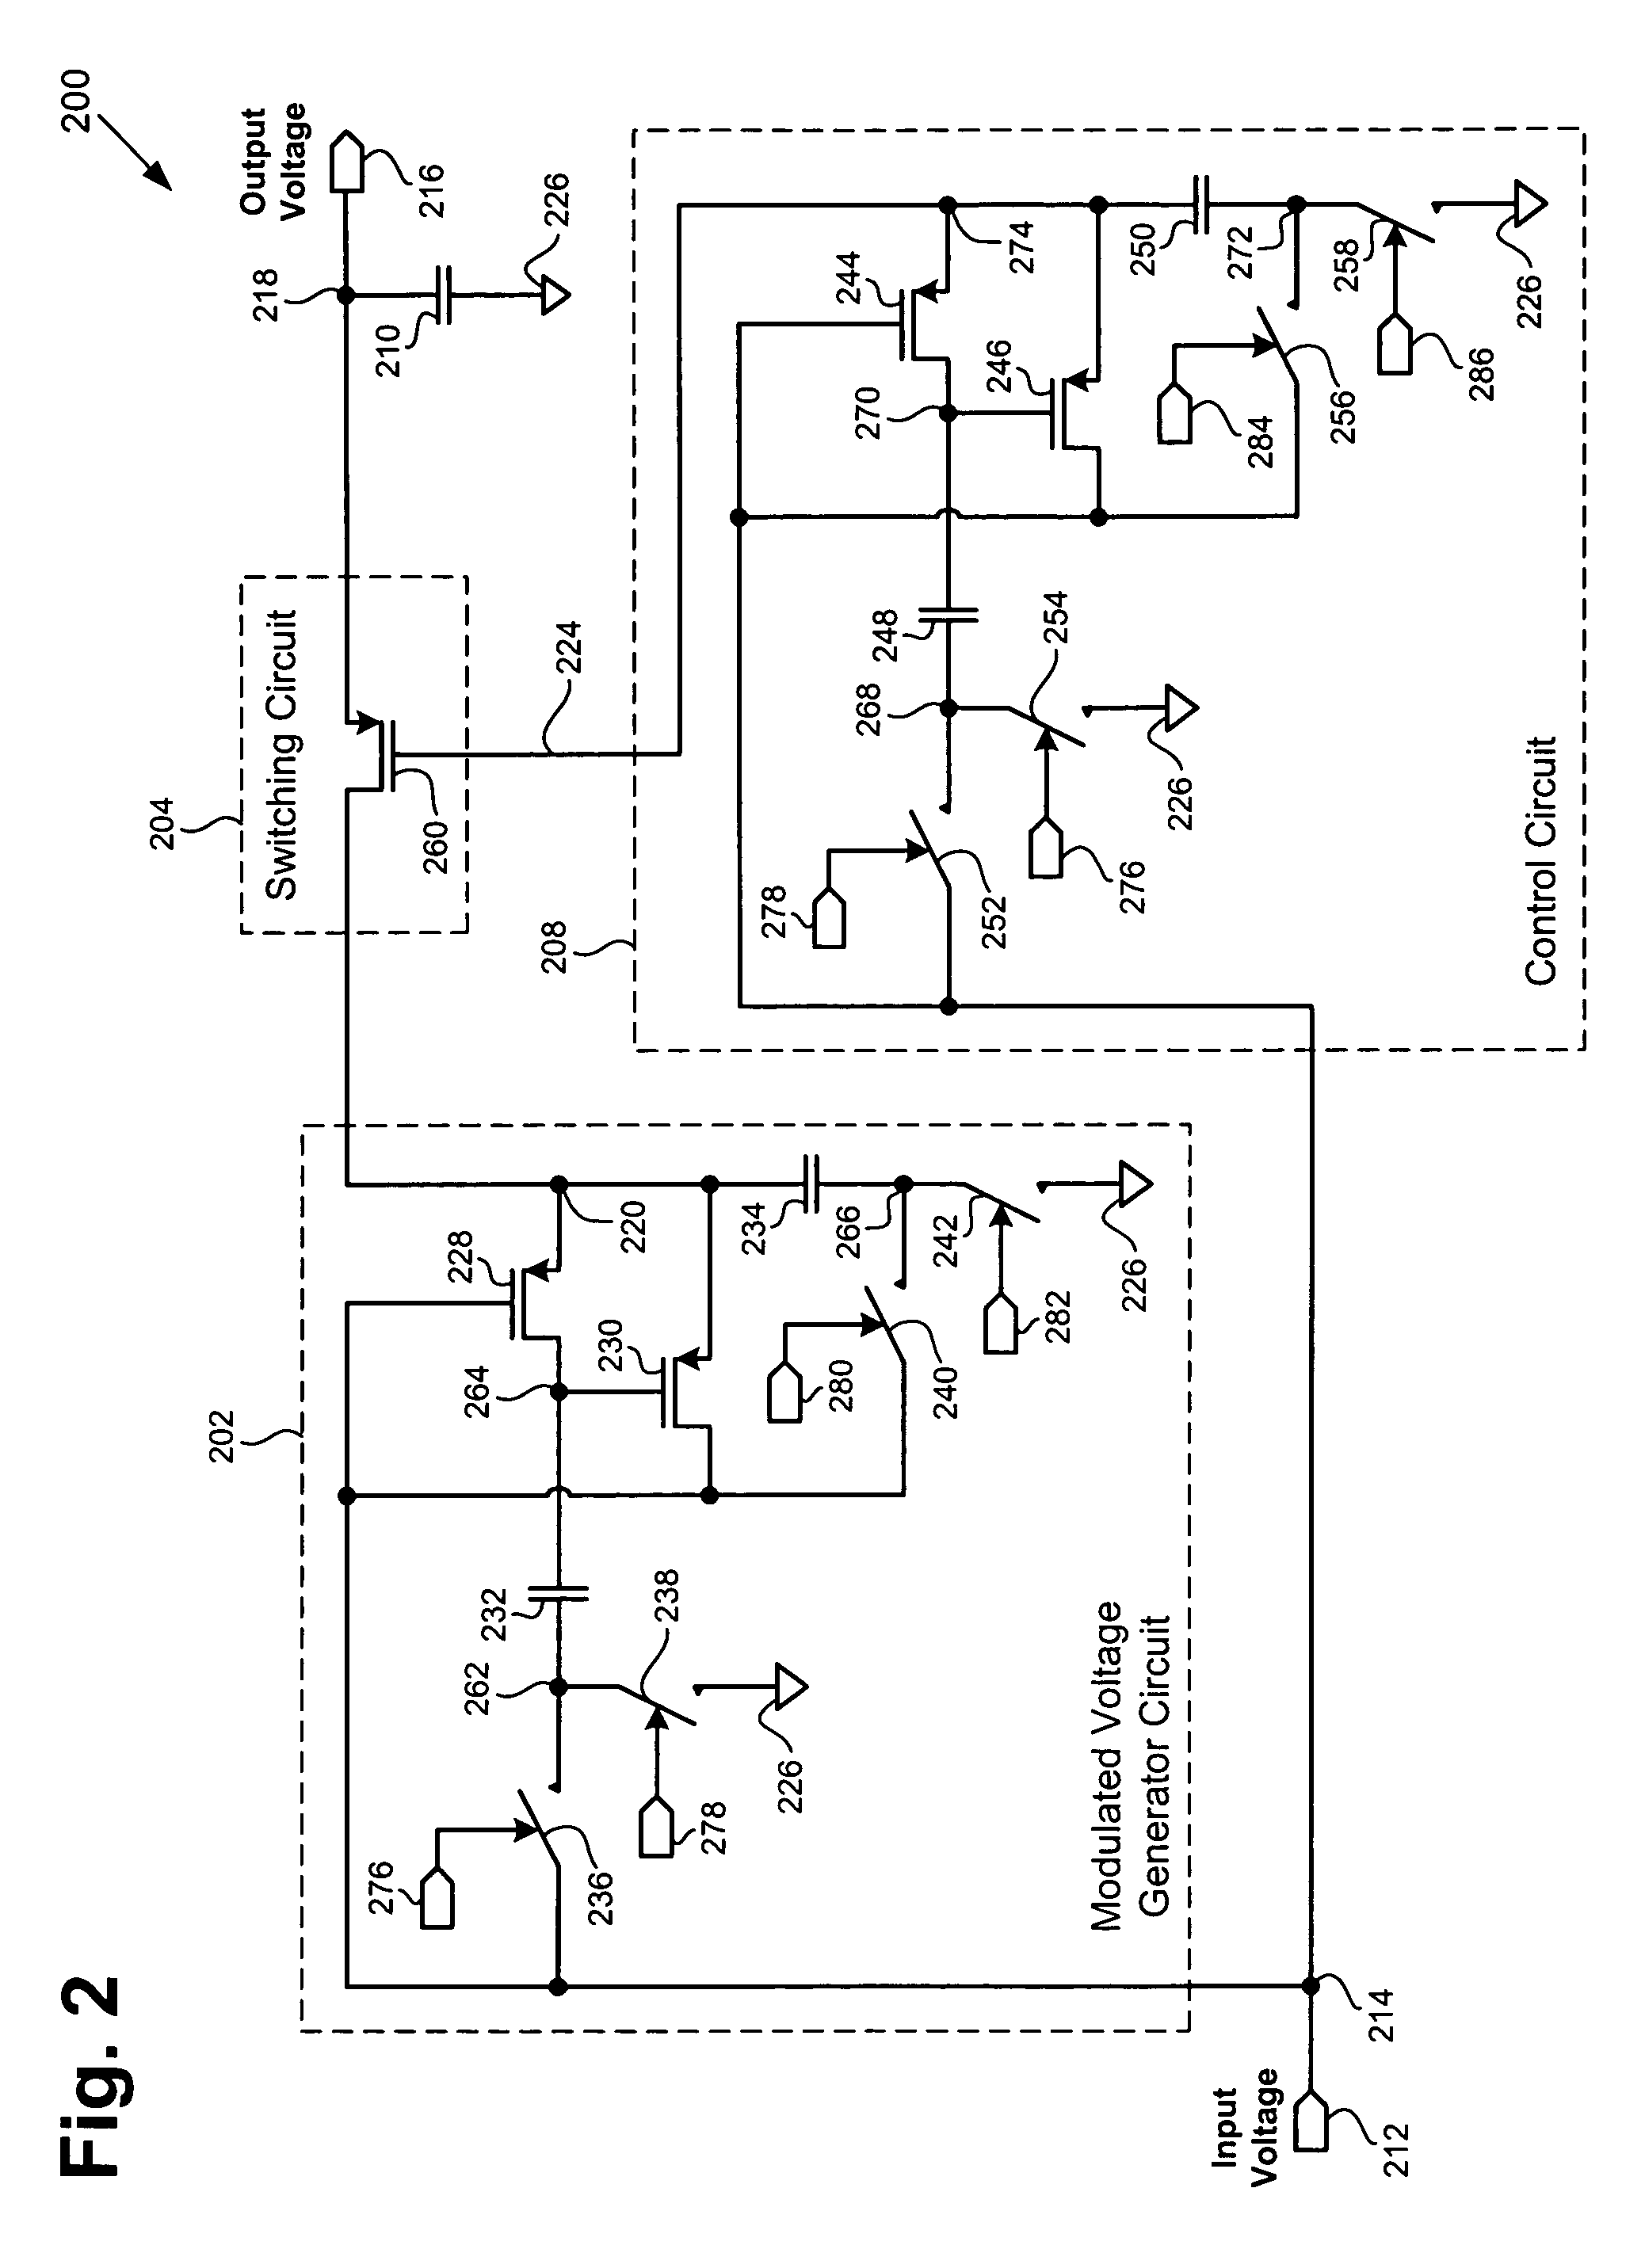 Voltage up-conversion circuit using low voltage transistors